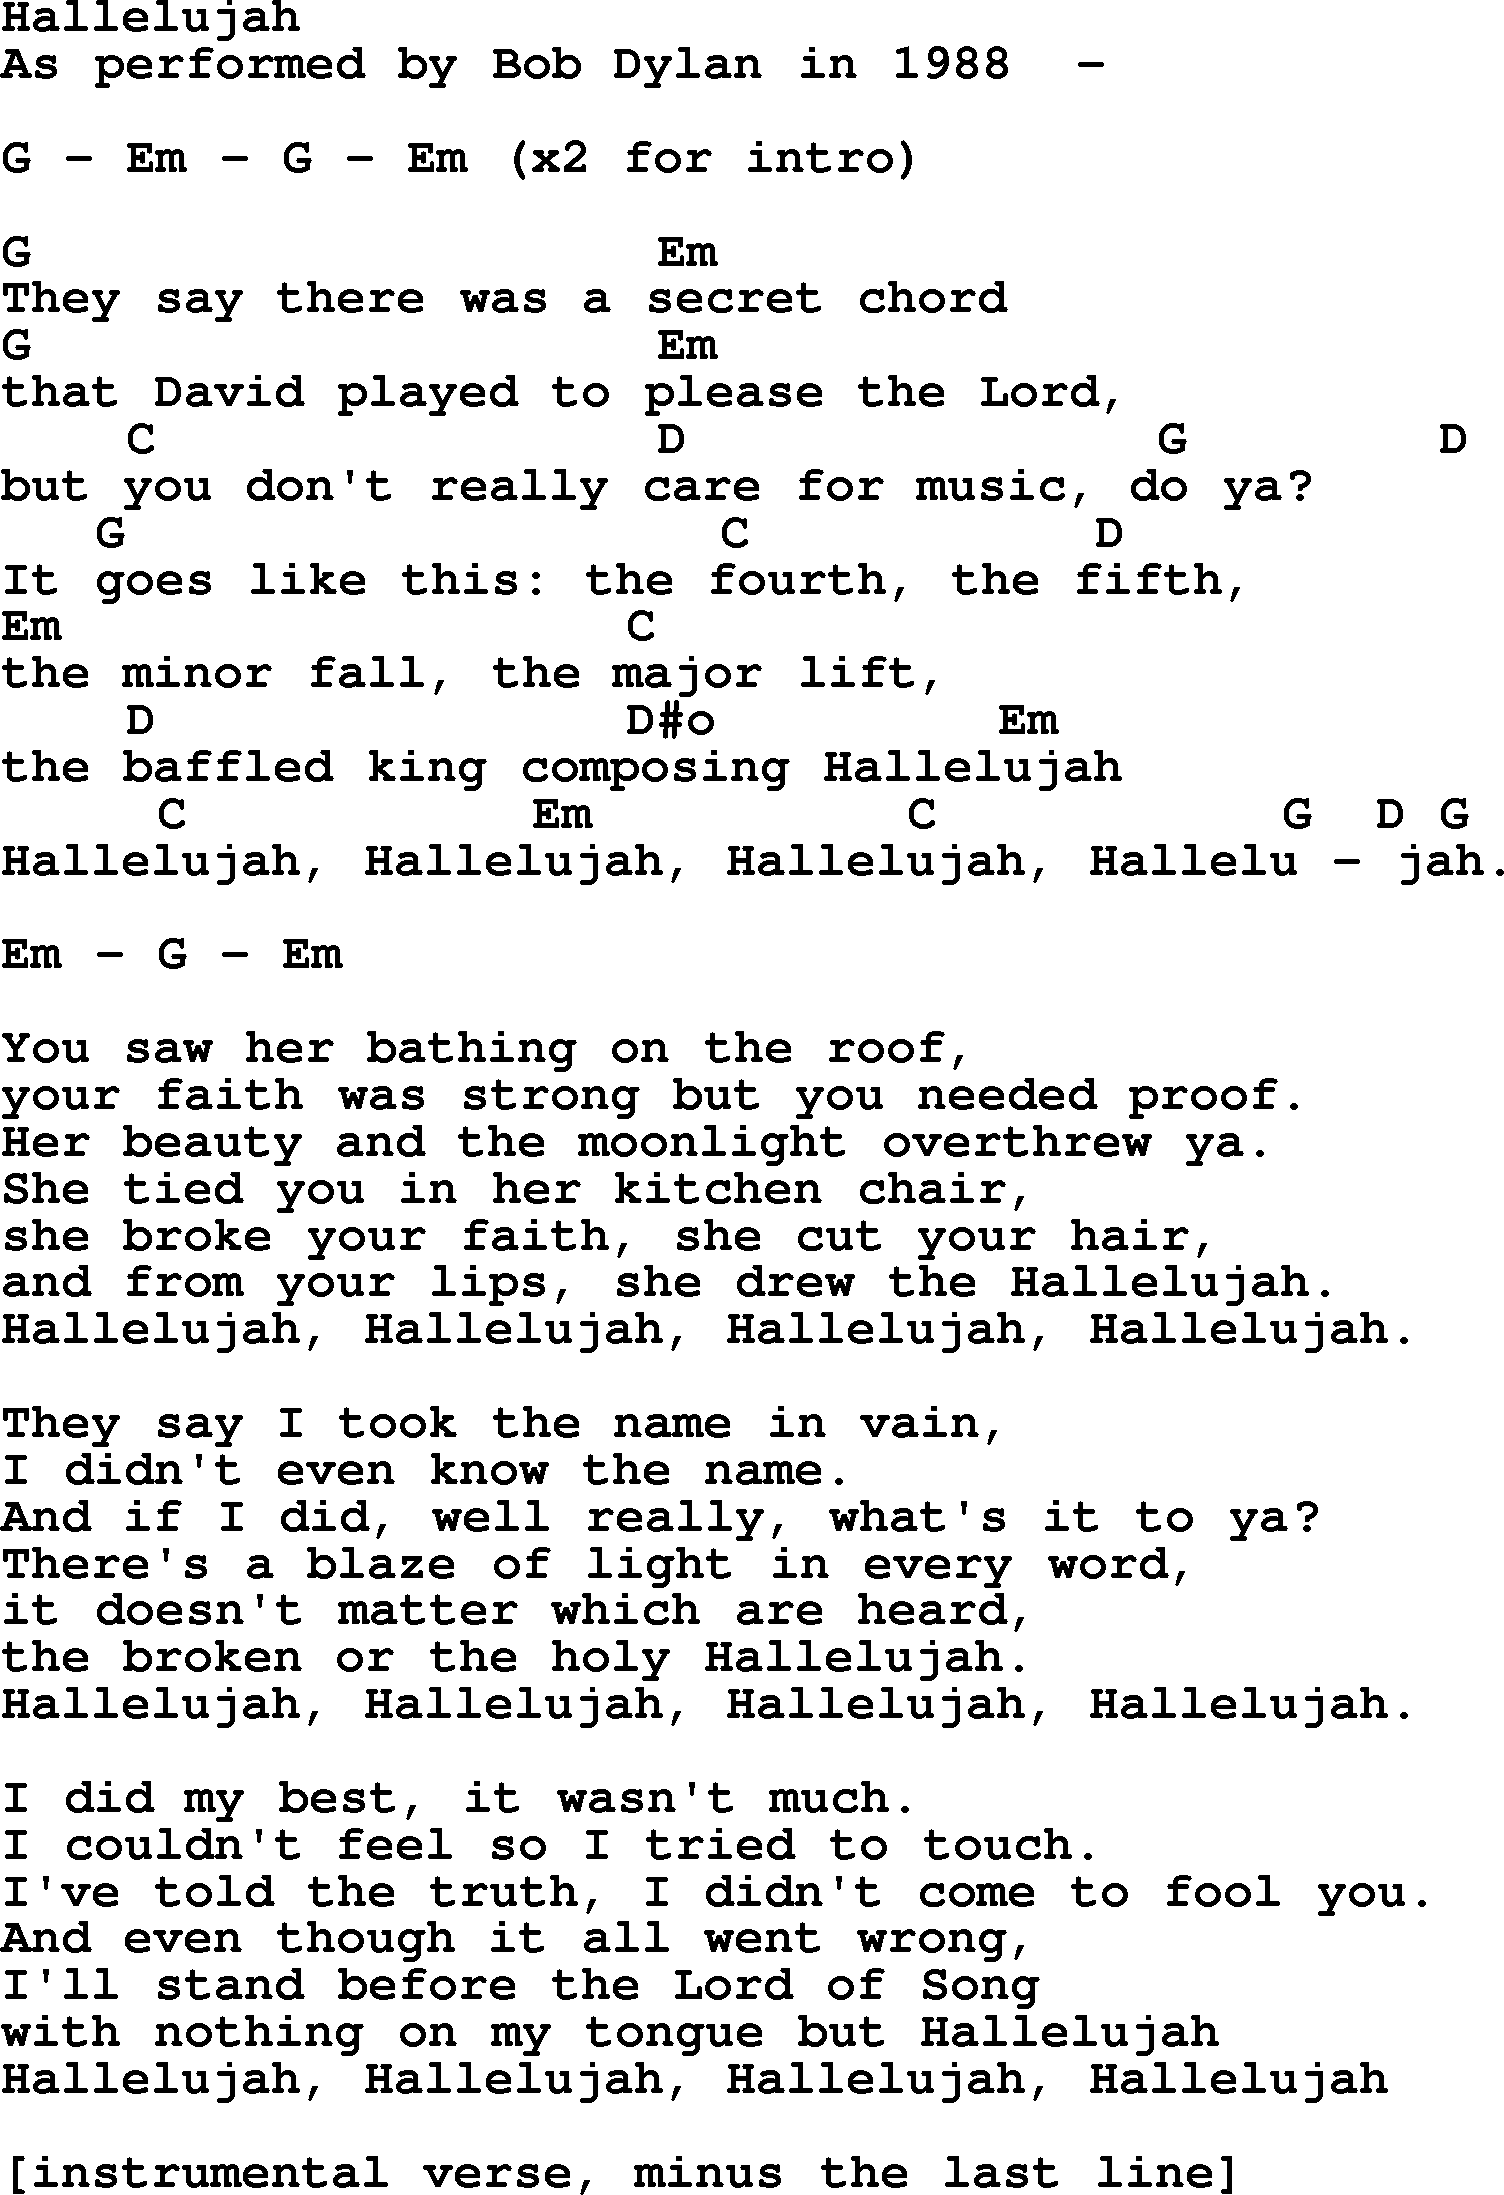 Bob Dylan song, lyrics with chords - Hallelujah